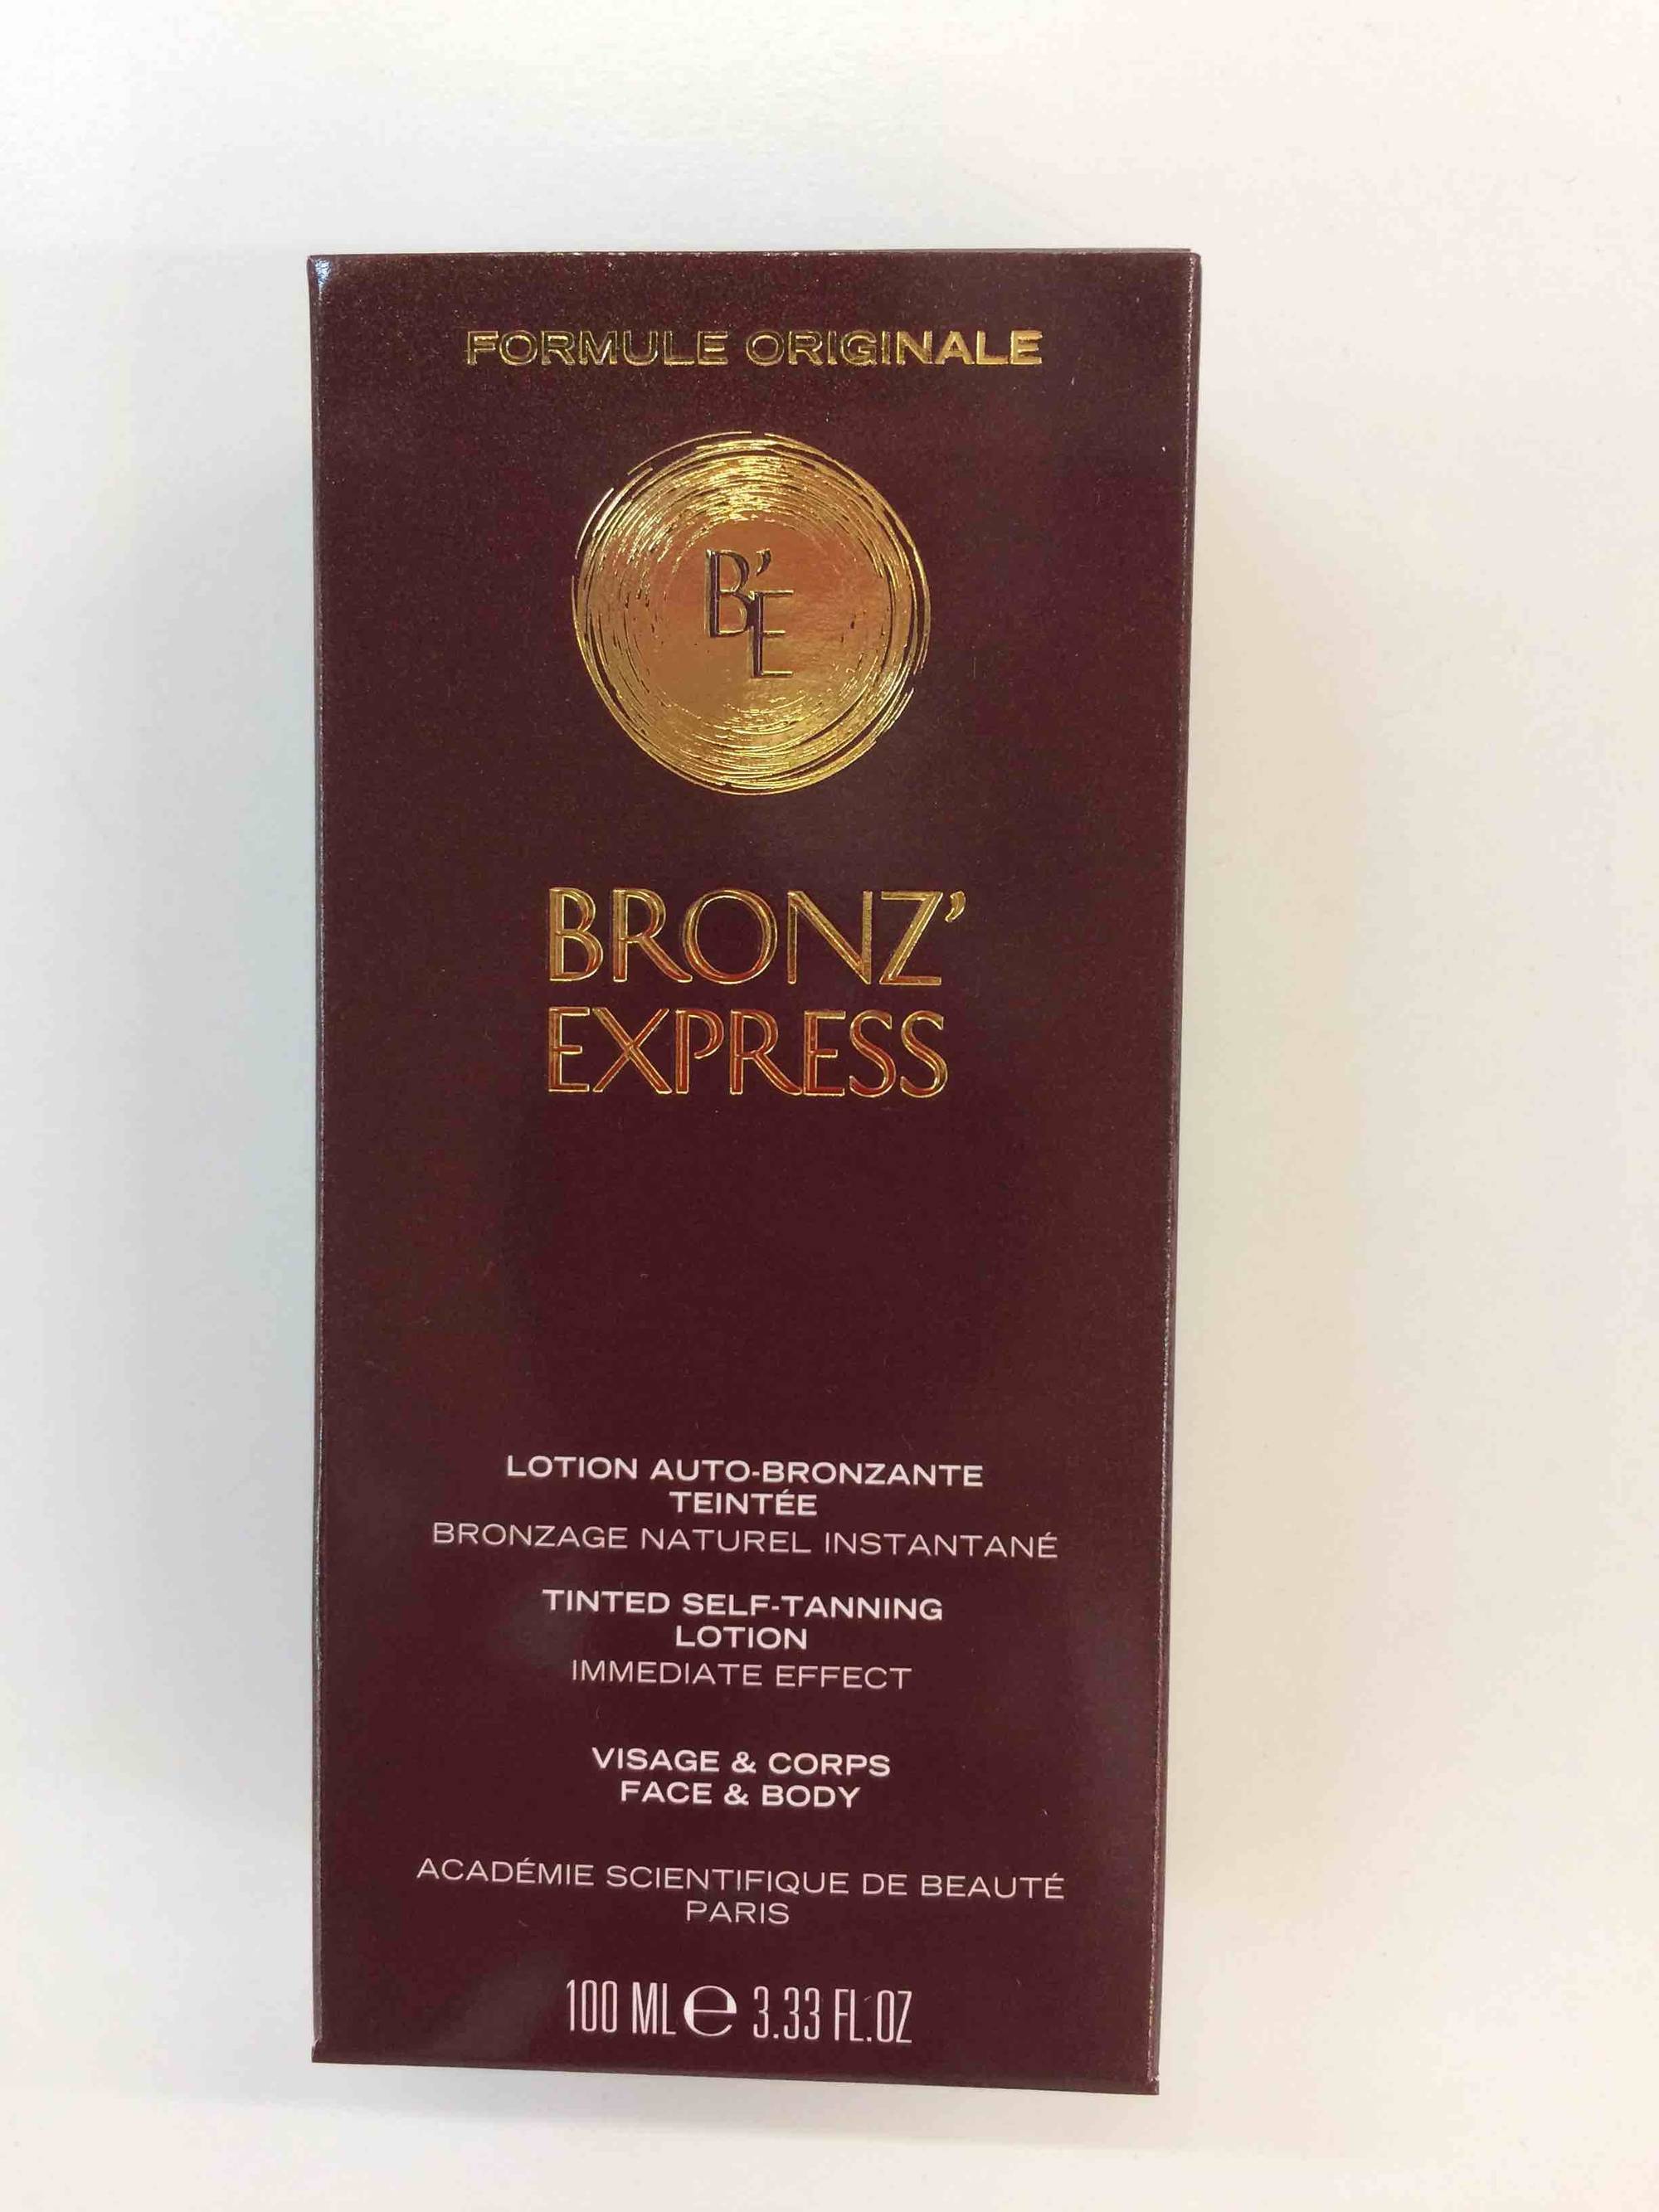 BRONZ'EXPRESS - Lotion auto-bronzante teintée